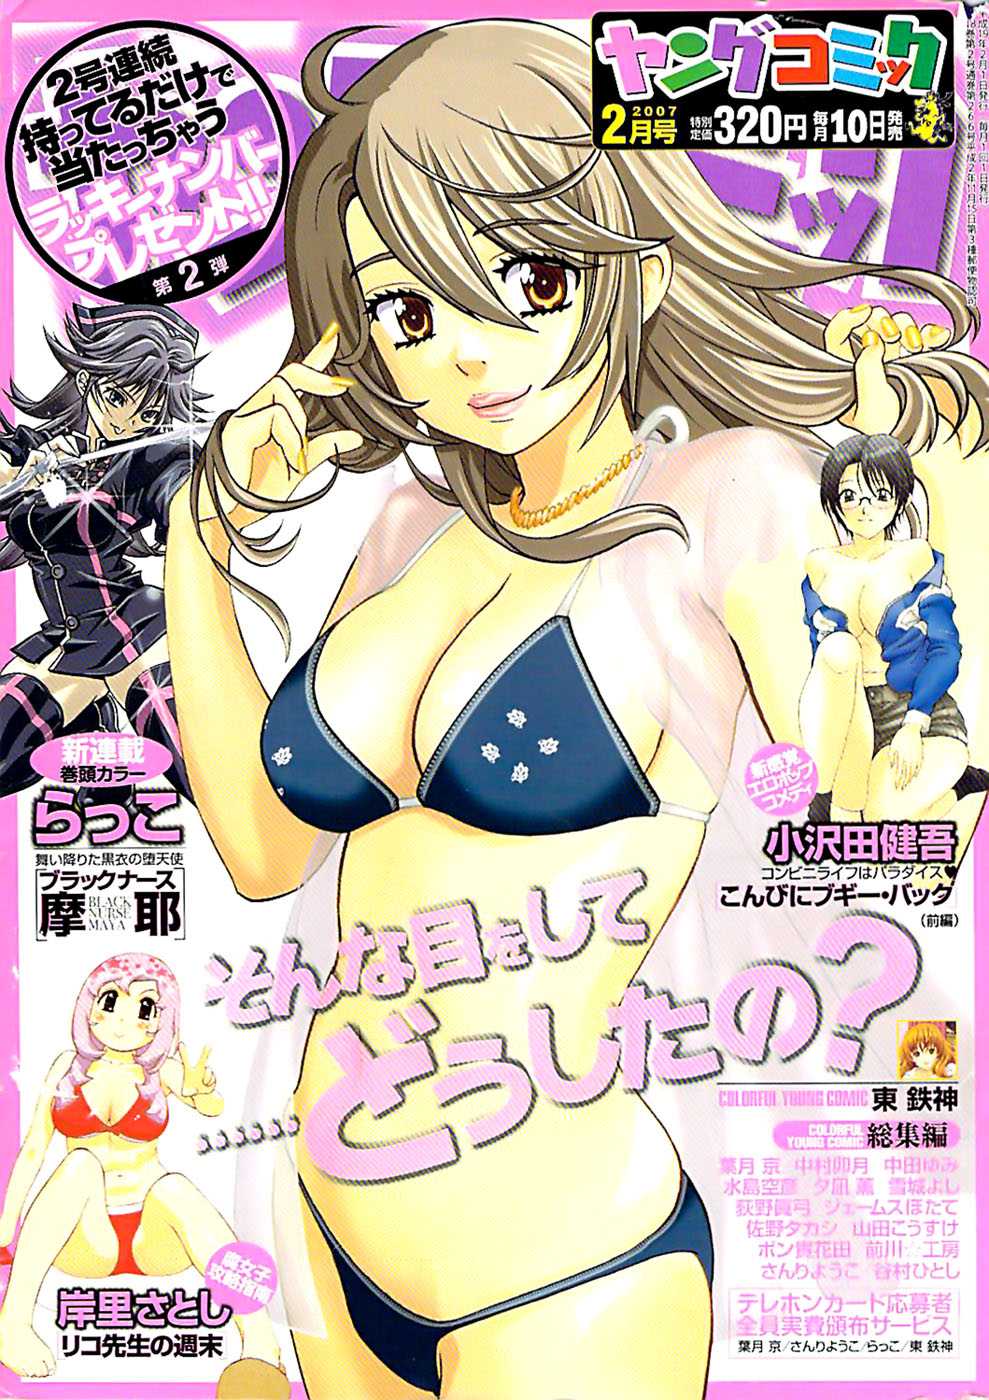 Young Comic 2007-02 ヤングコミック 2007年02月号